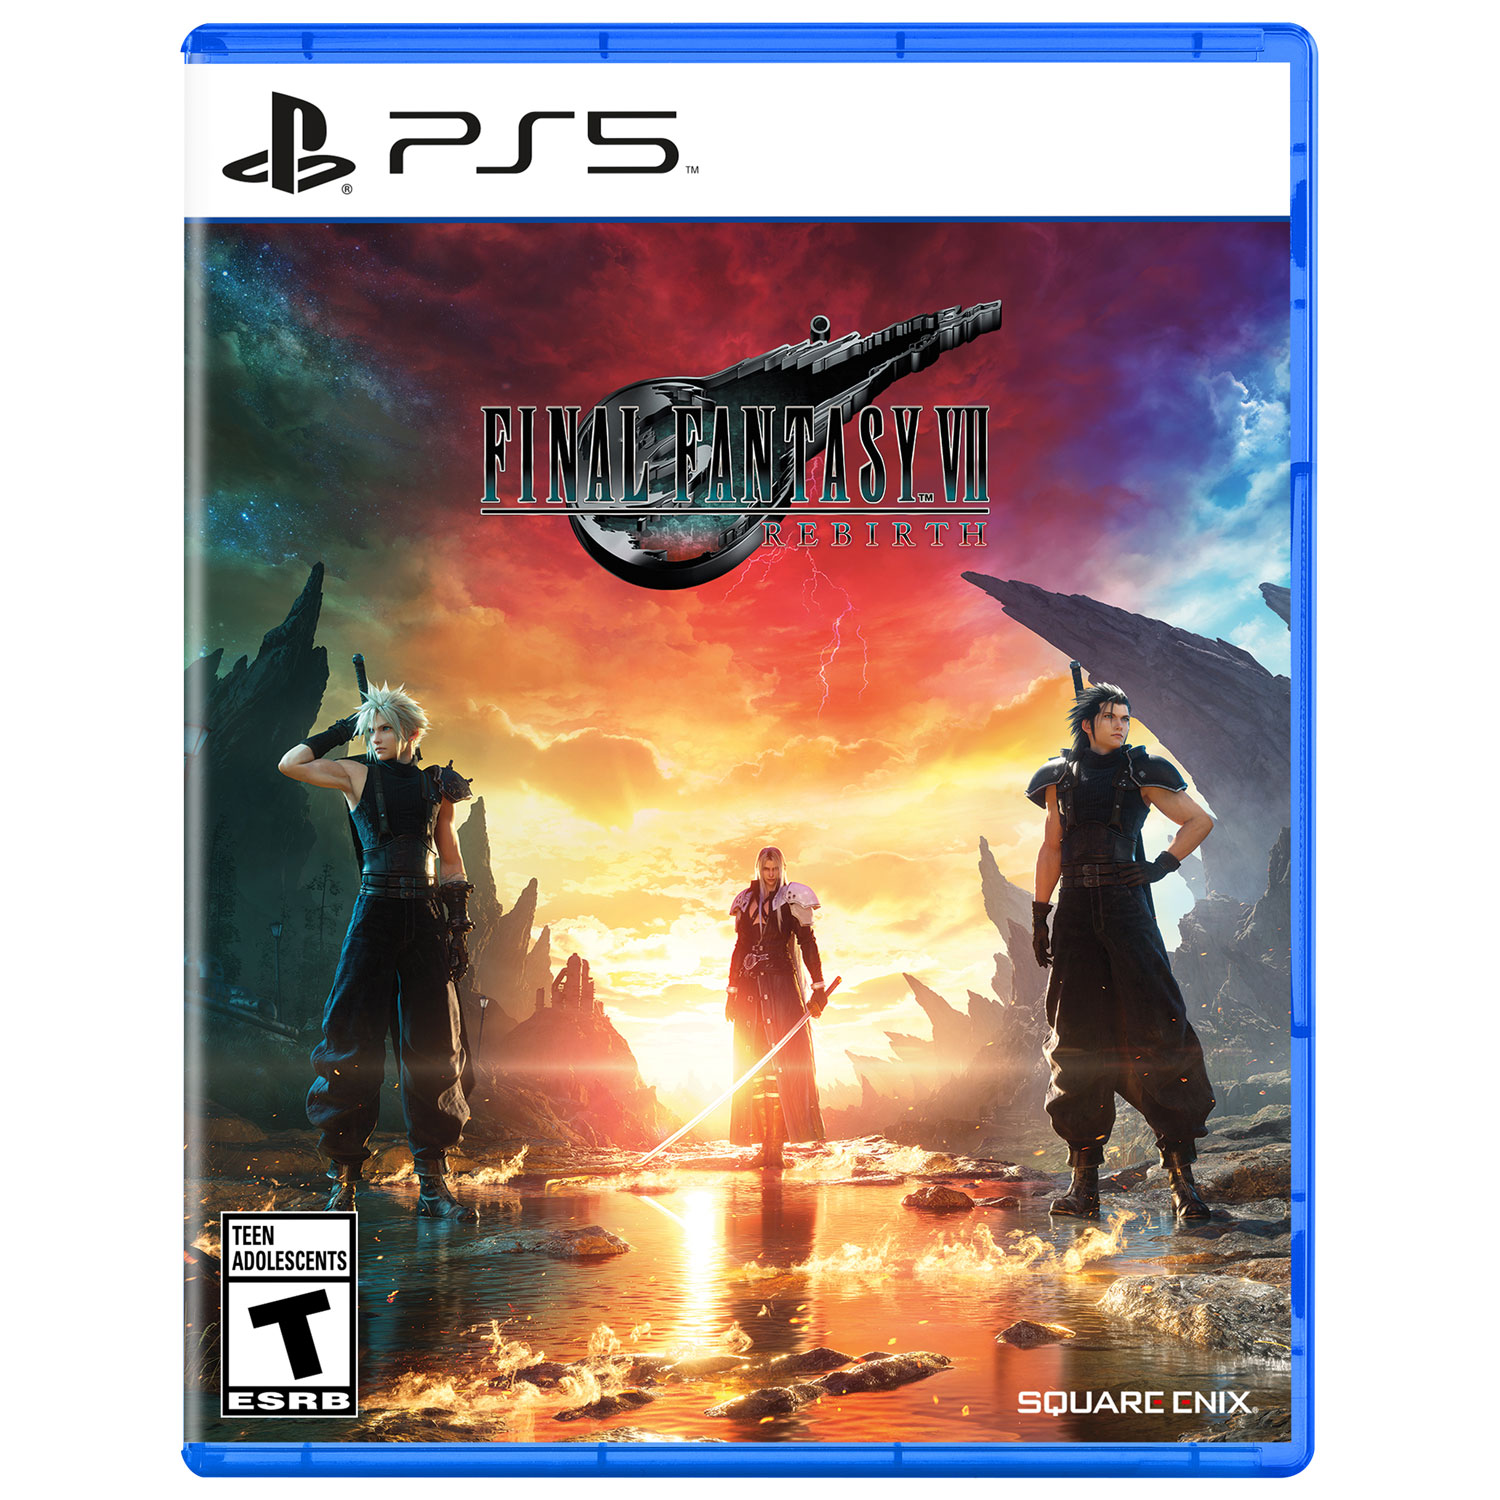 Final Fantasy VII: Rebirth (PS5) with SteelBook | Best Buy Canada